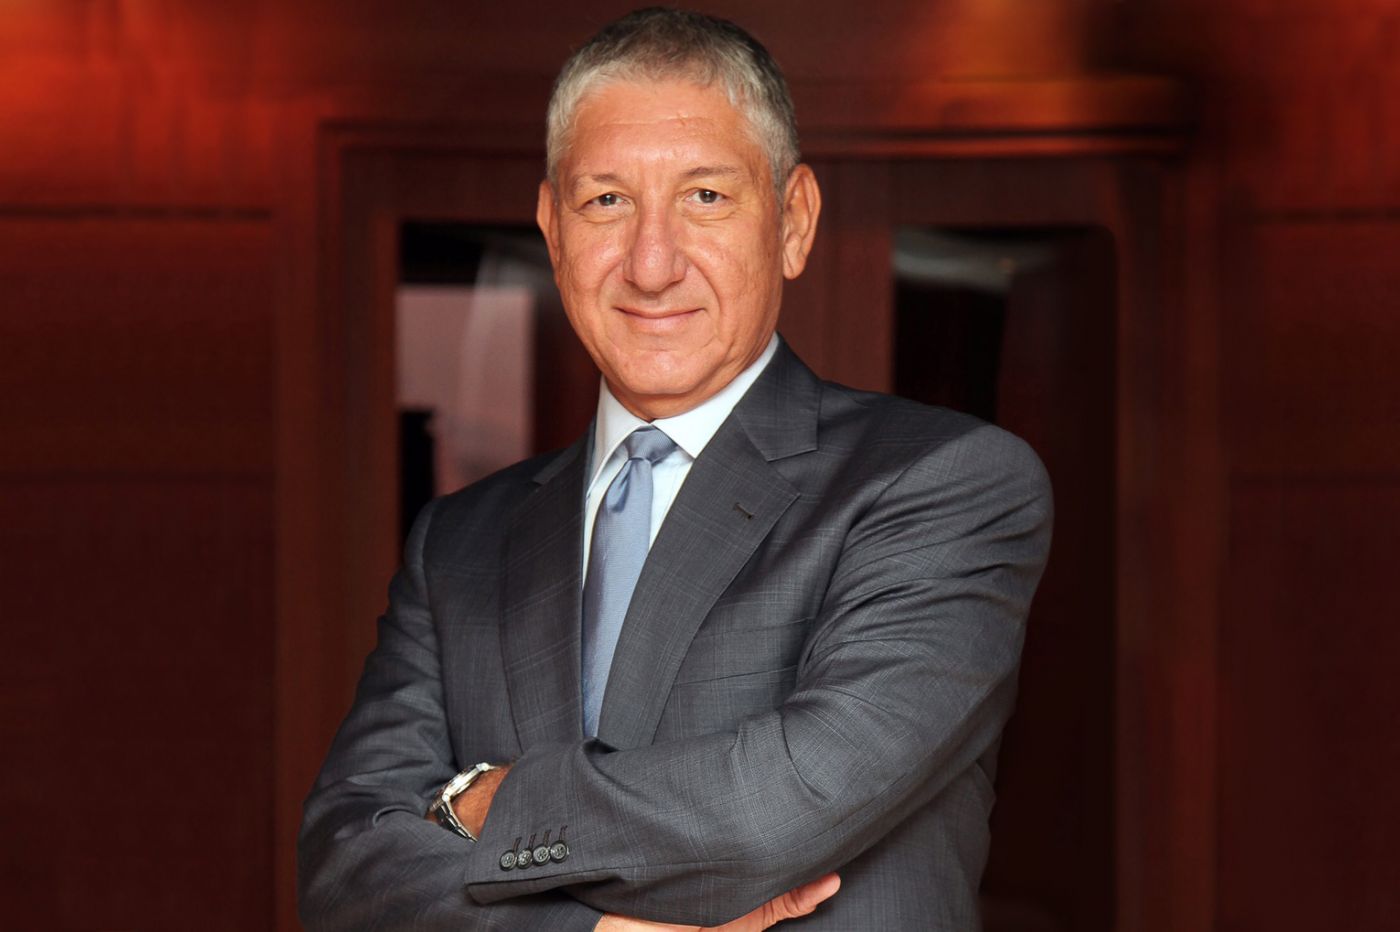 Petrol Ofisi Selim Şiper’i CEO olarak atadı